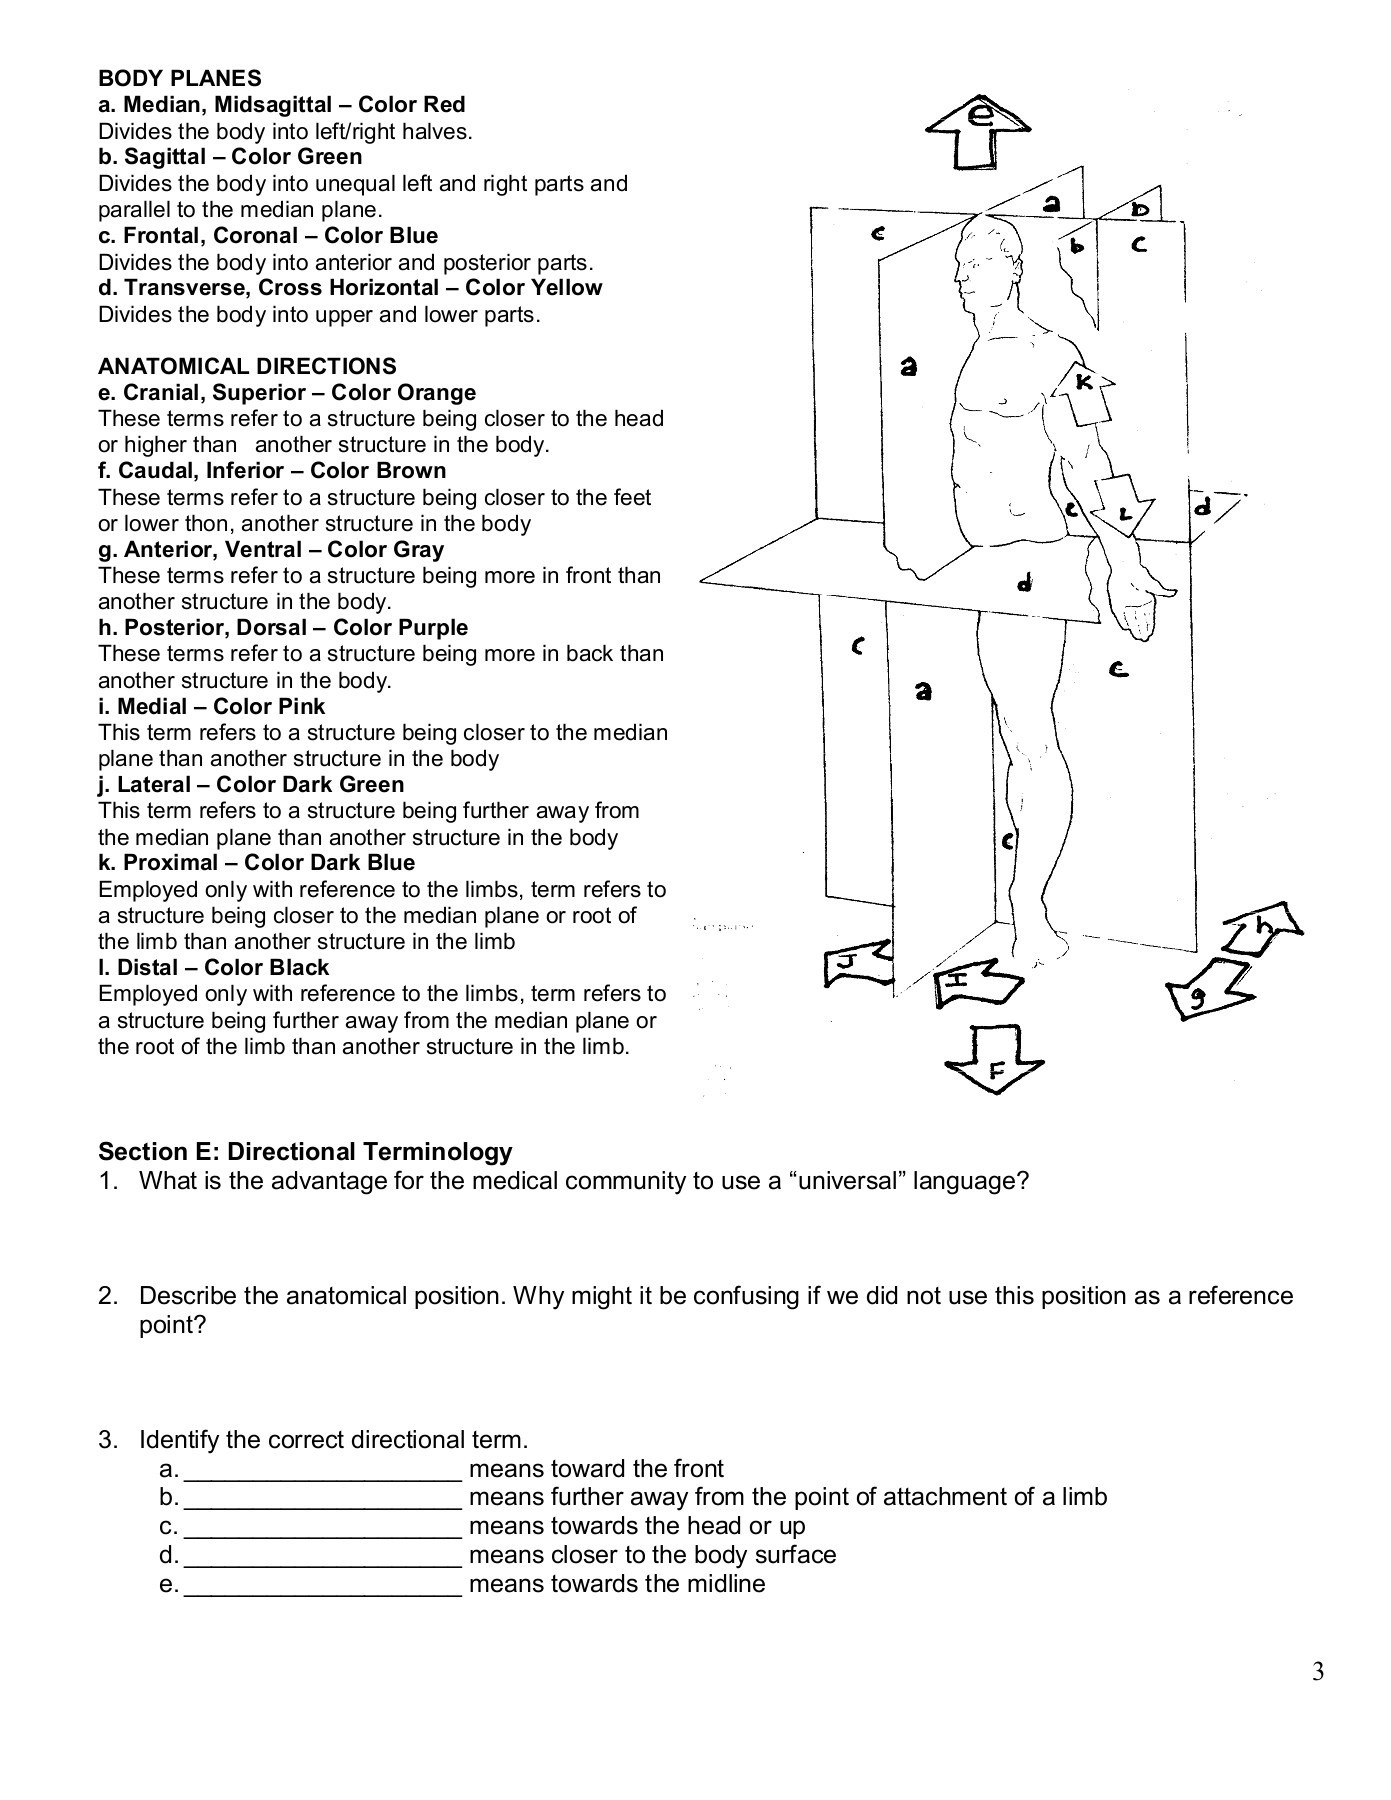 anatomical-terms-worksheet-answer-key-anatomy-worksheets